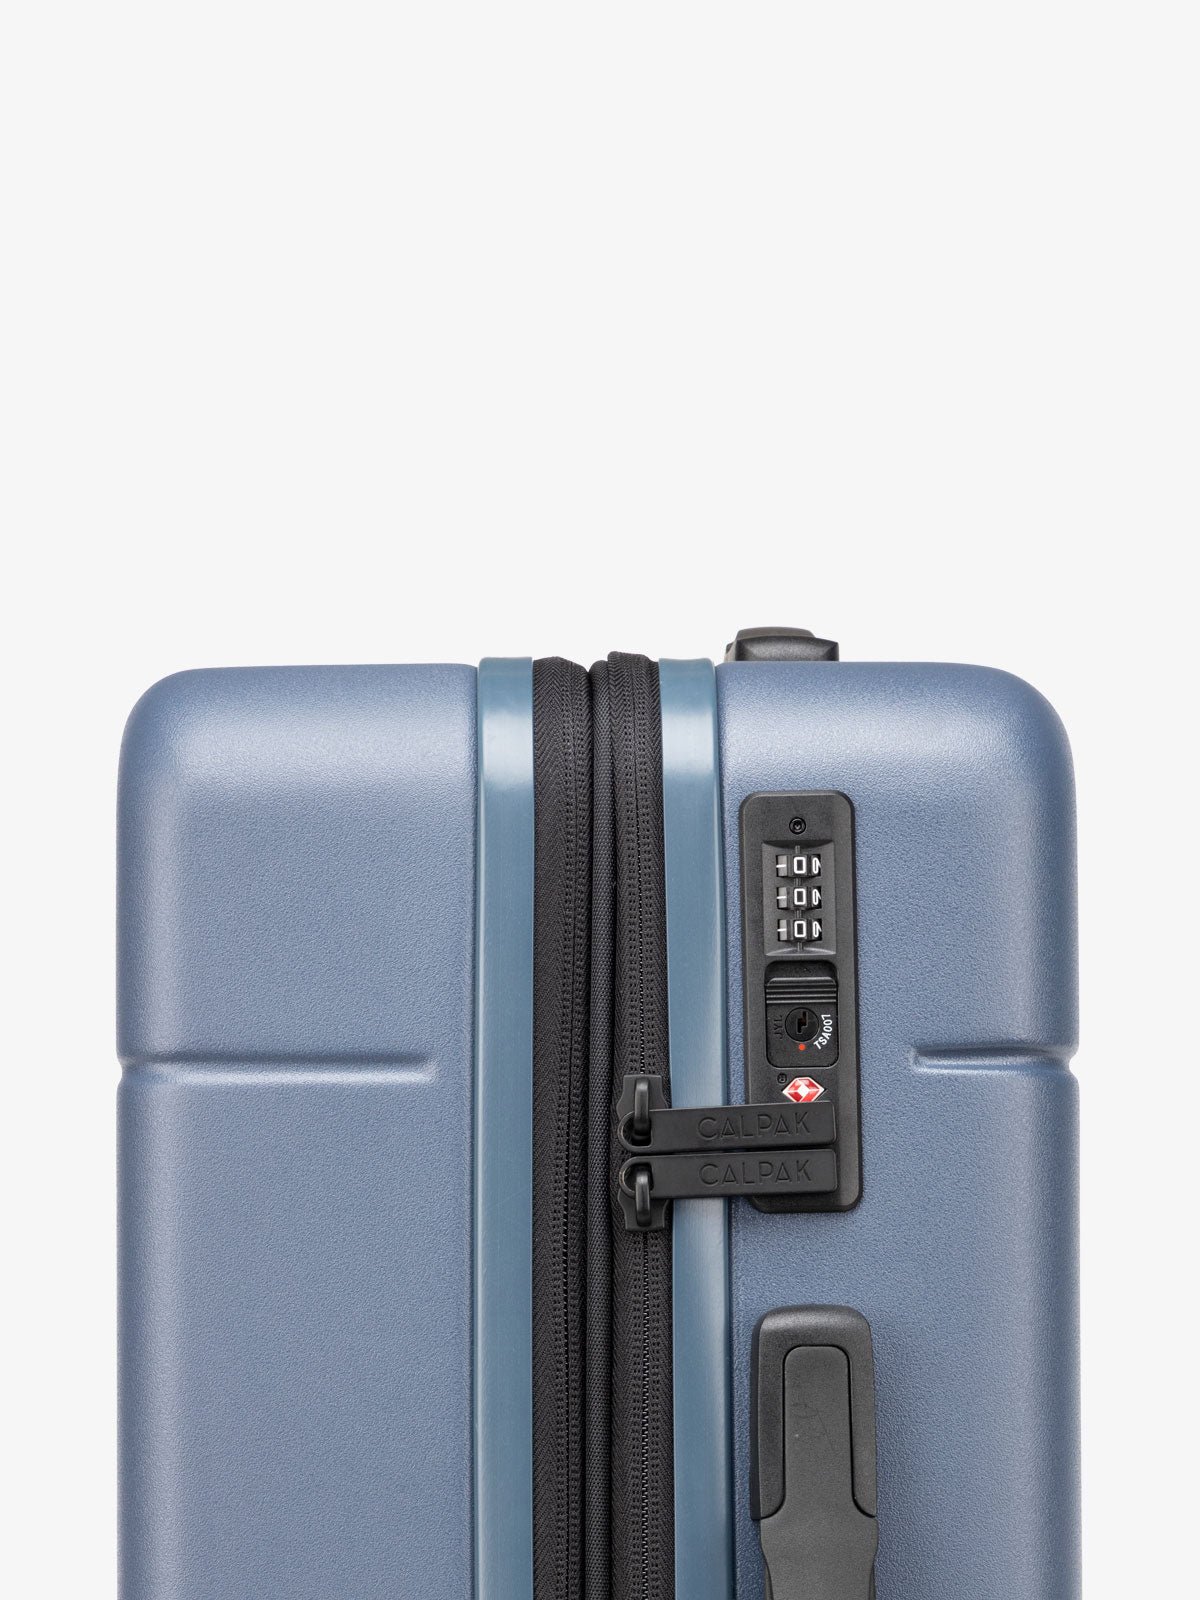 TSA lock of CALPAK Hue hard side carry-on luggage with spinner wheels in blue atlantic